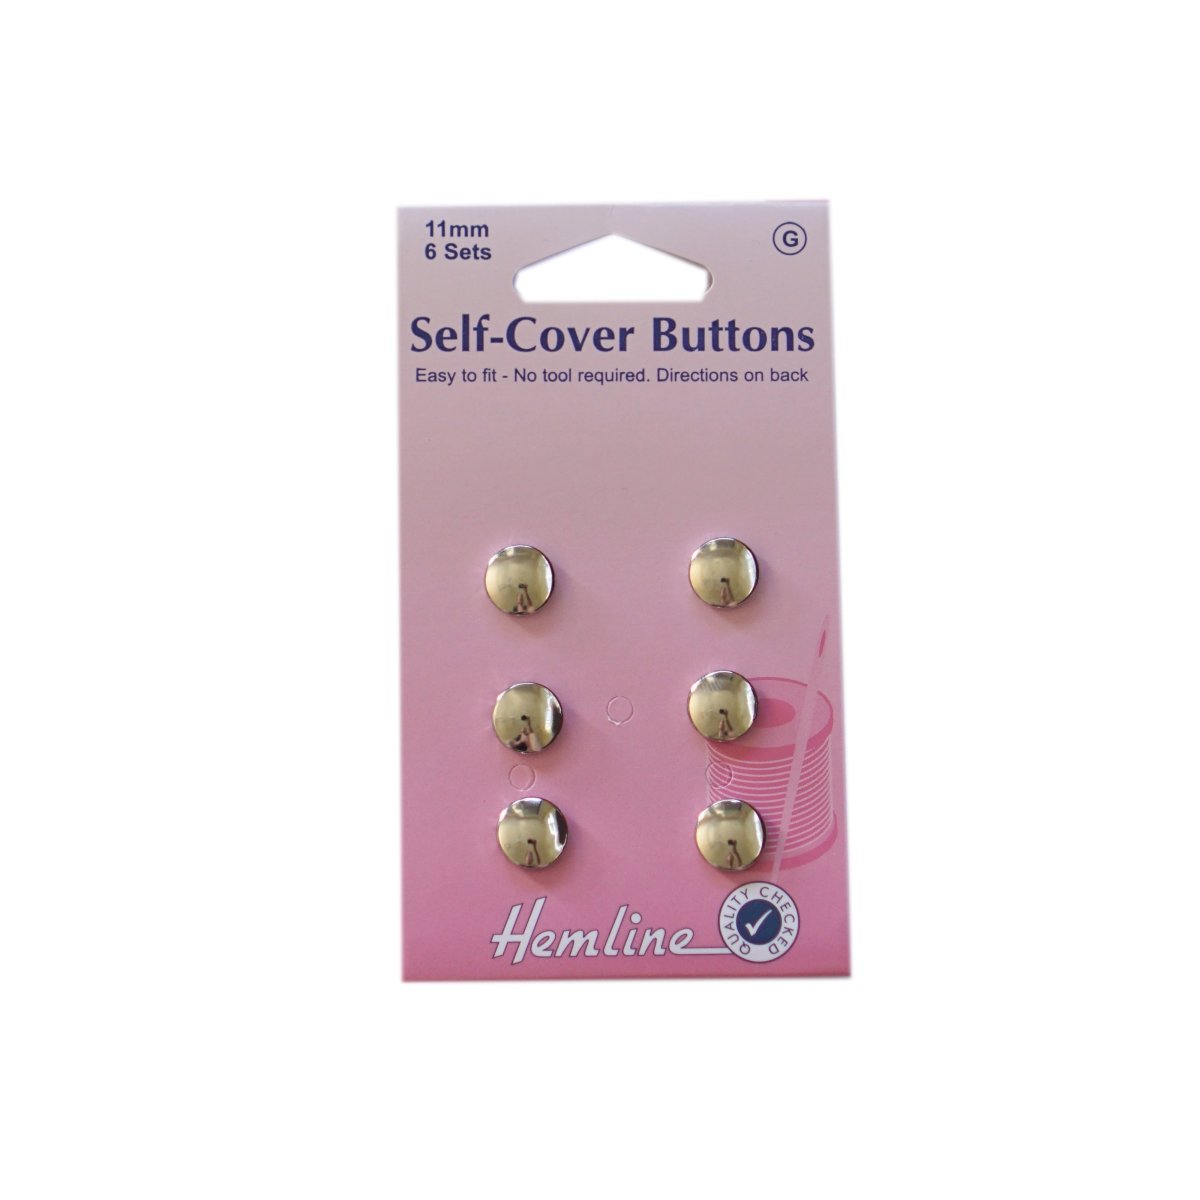 Hemline - Self Covering Buttons - 11mm x 6